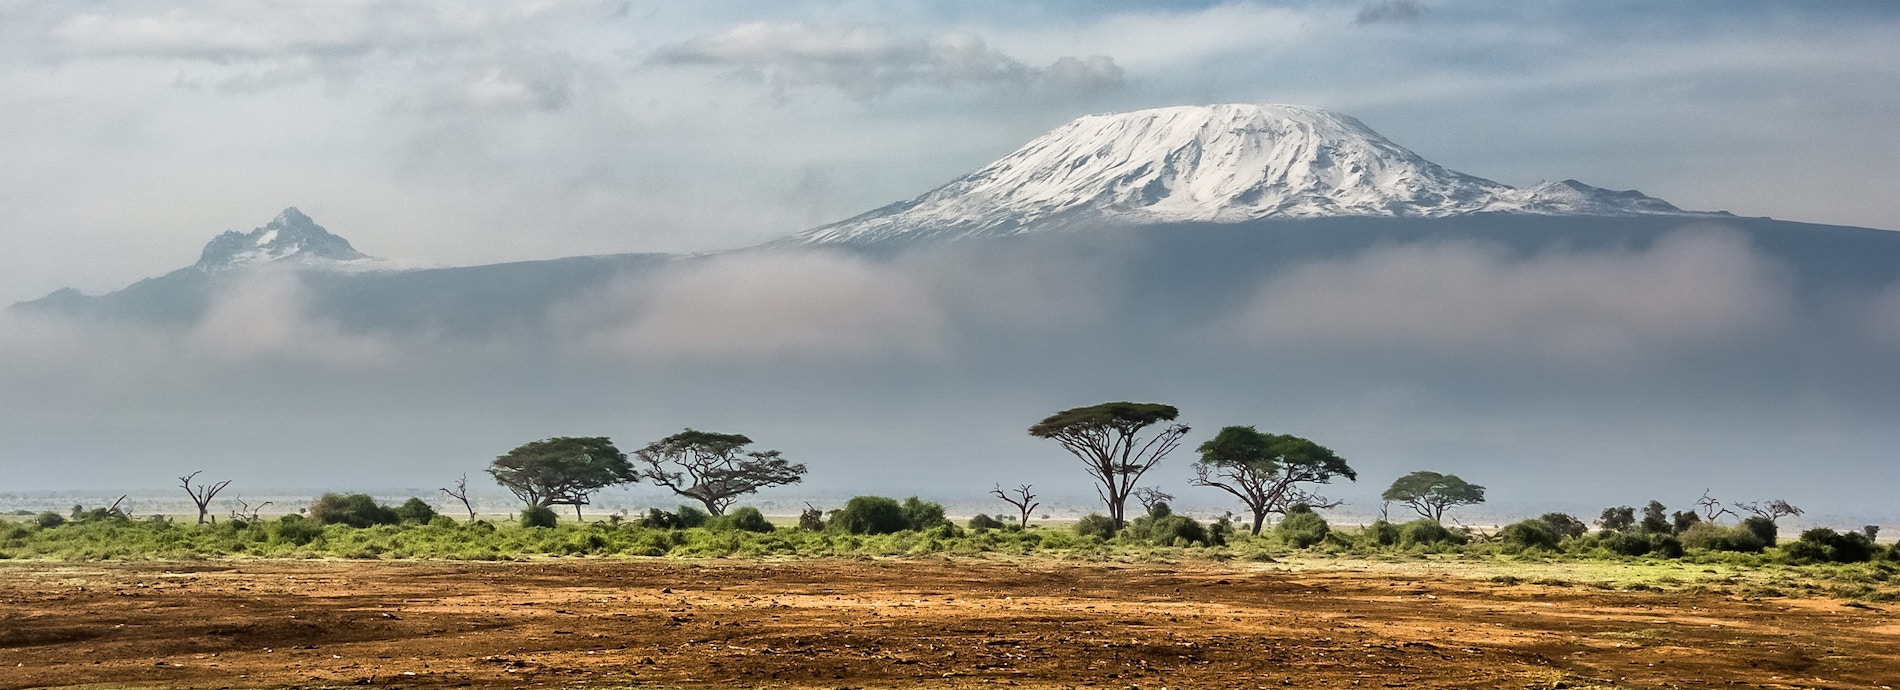 Kilimanjaro Challenge Banner